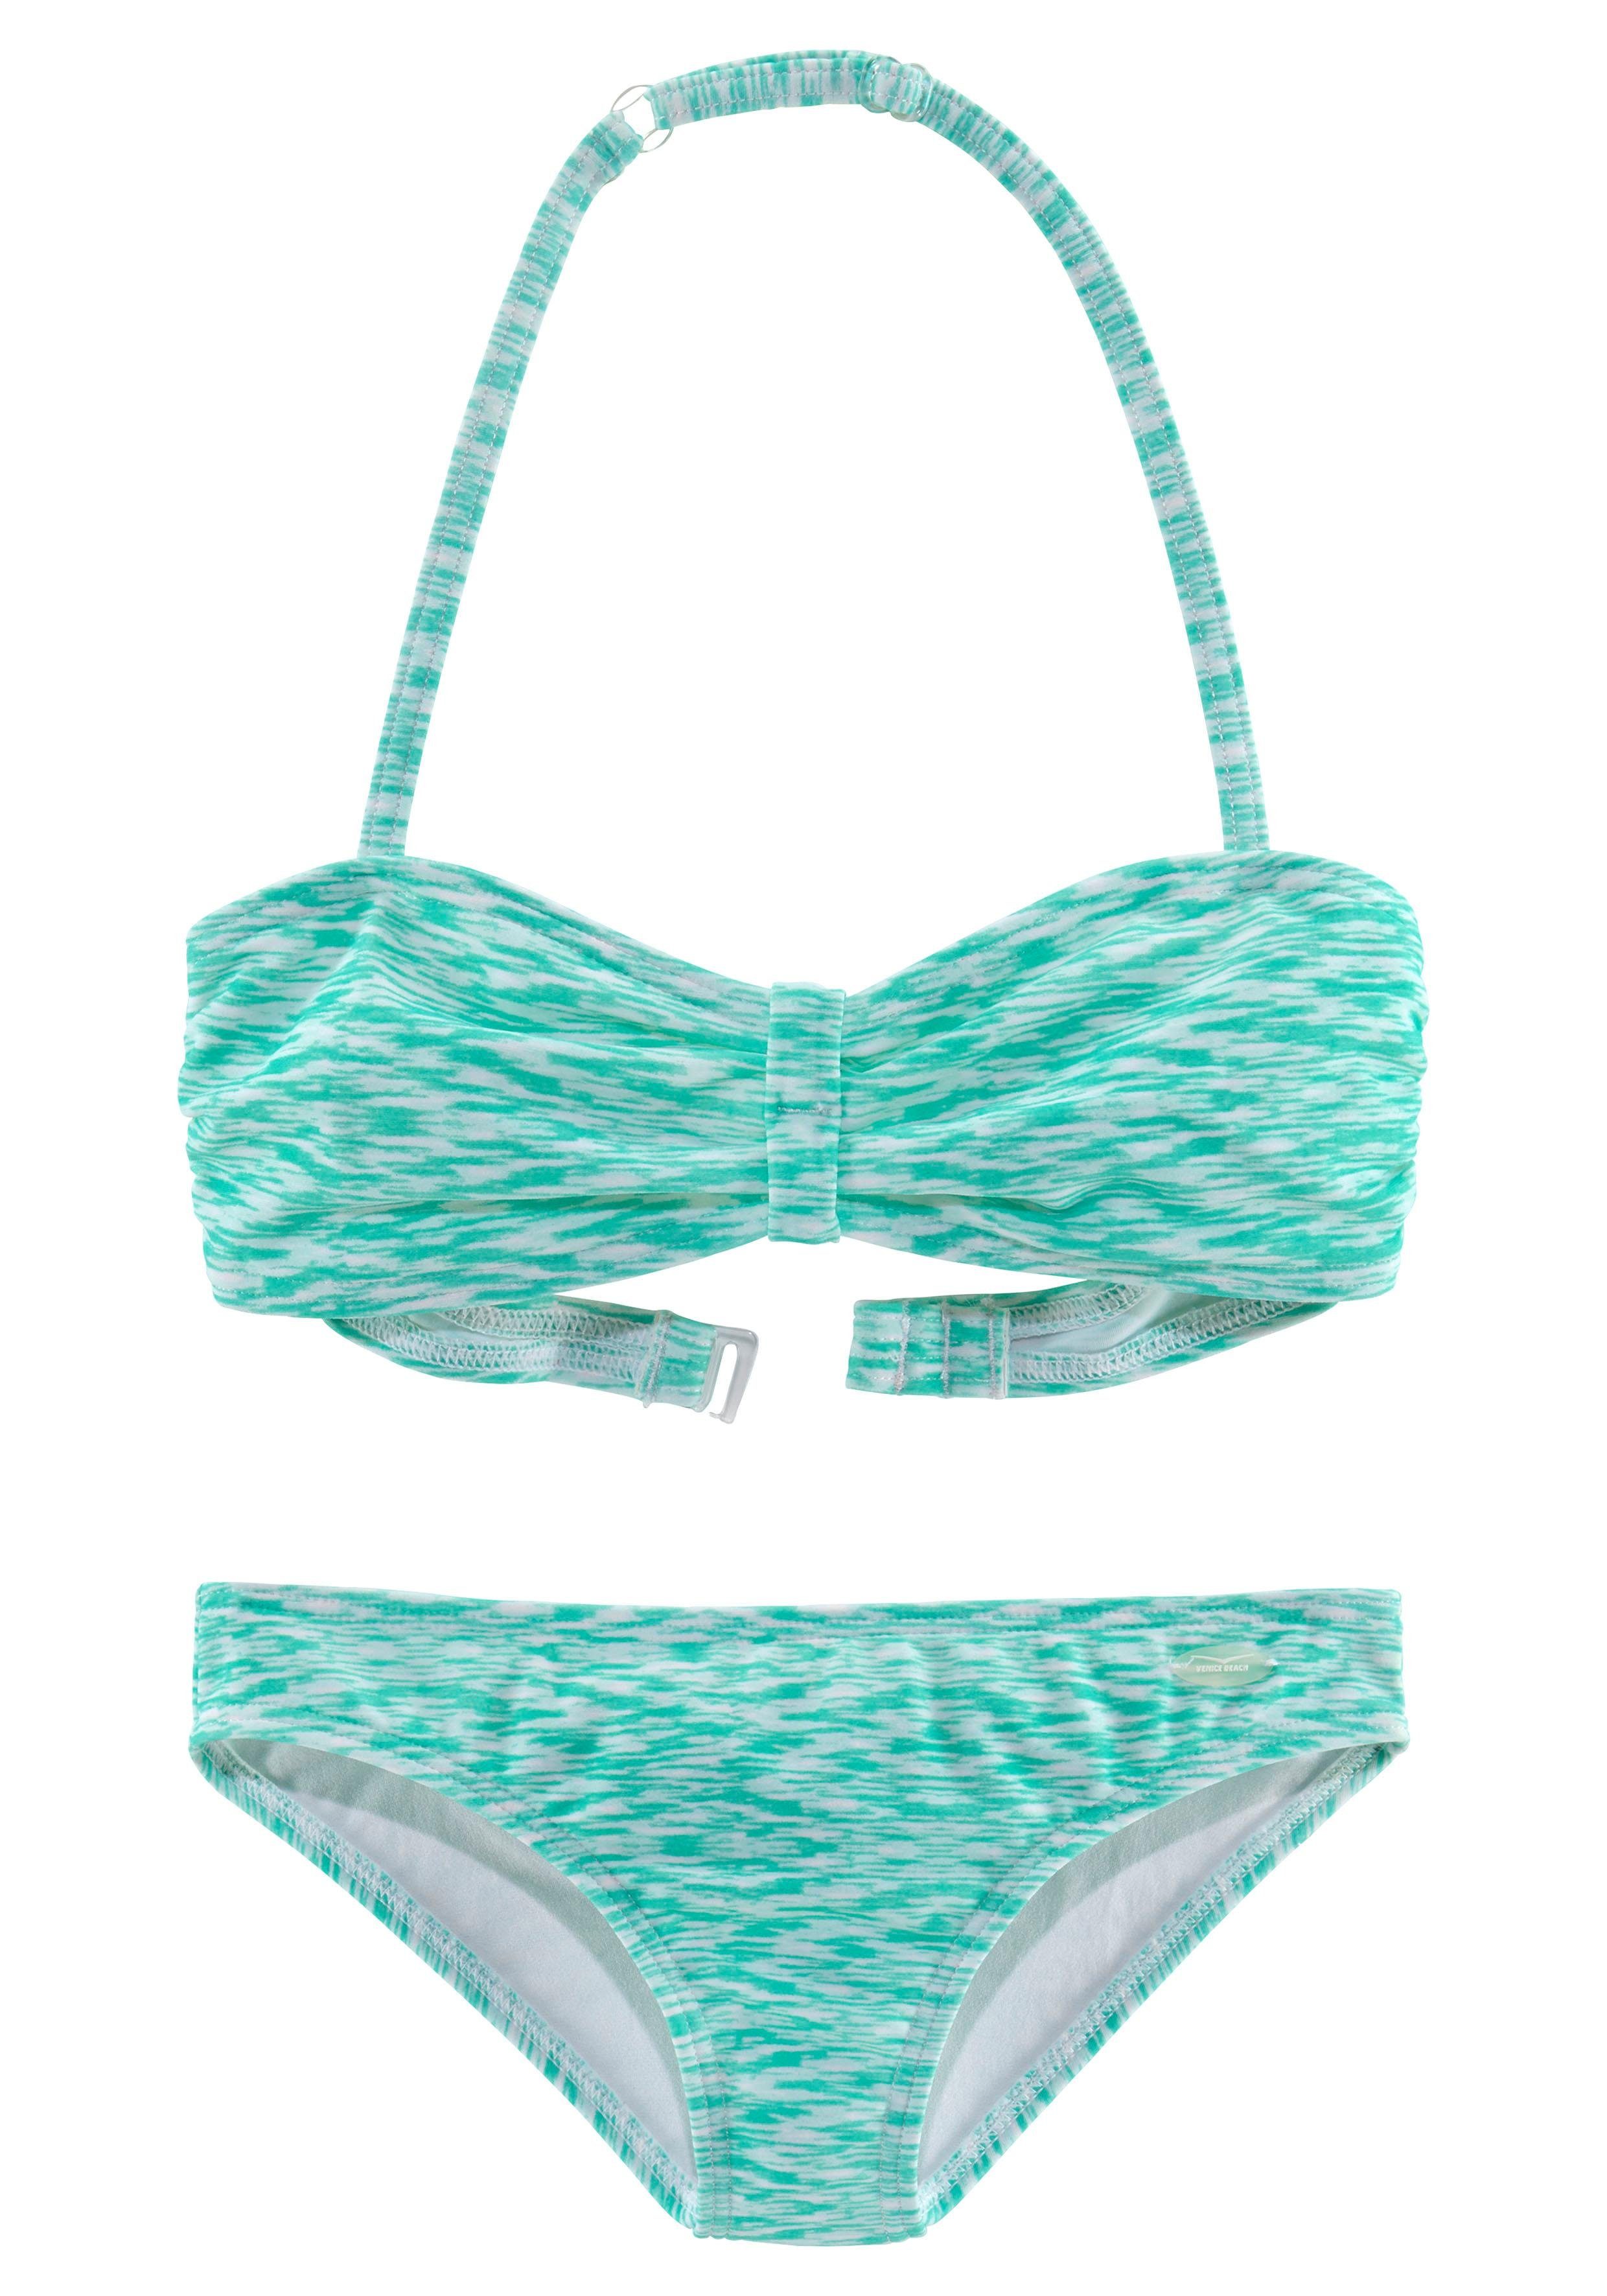 Venice Beach Bandeau-Bikini in Melange-Optik mint-weiß